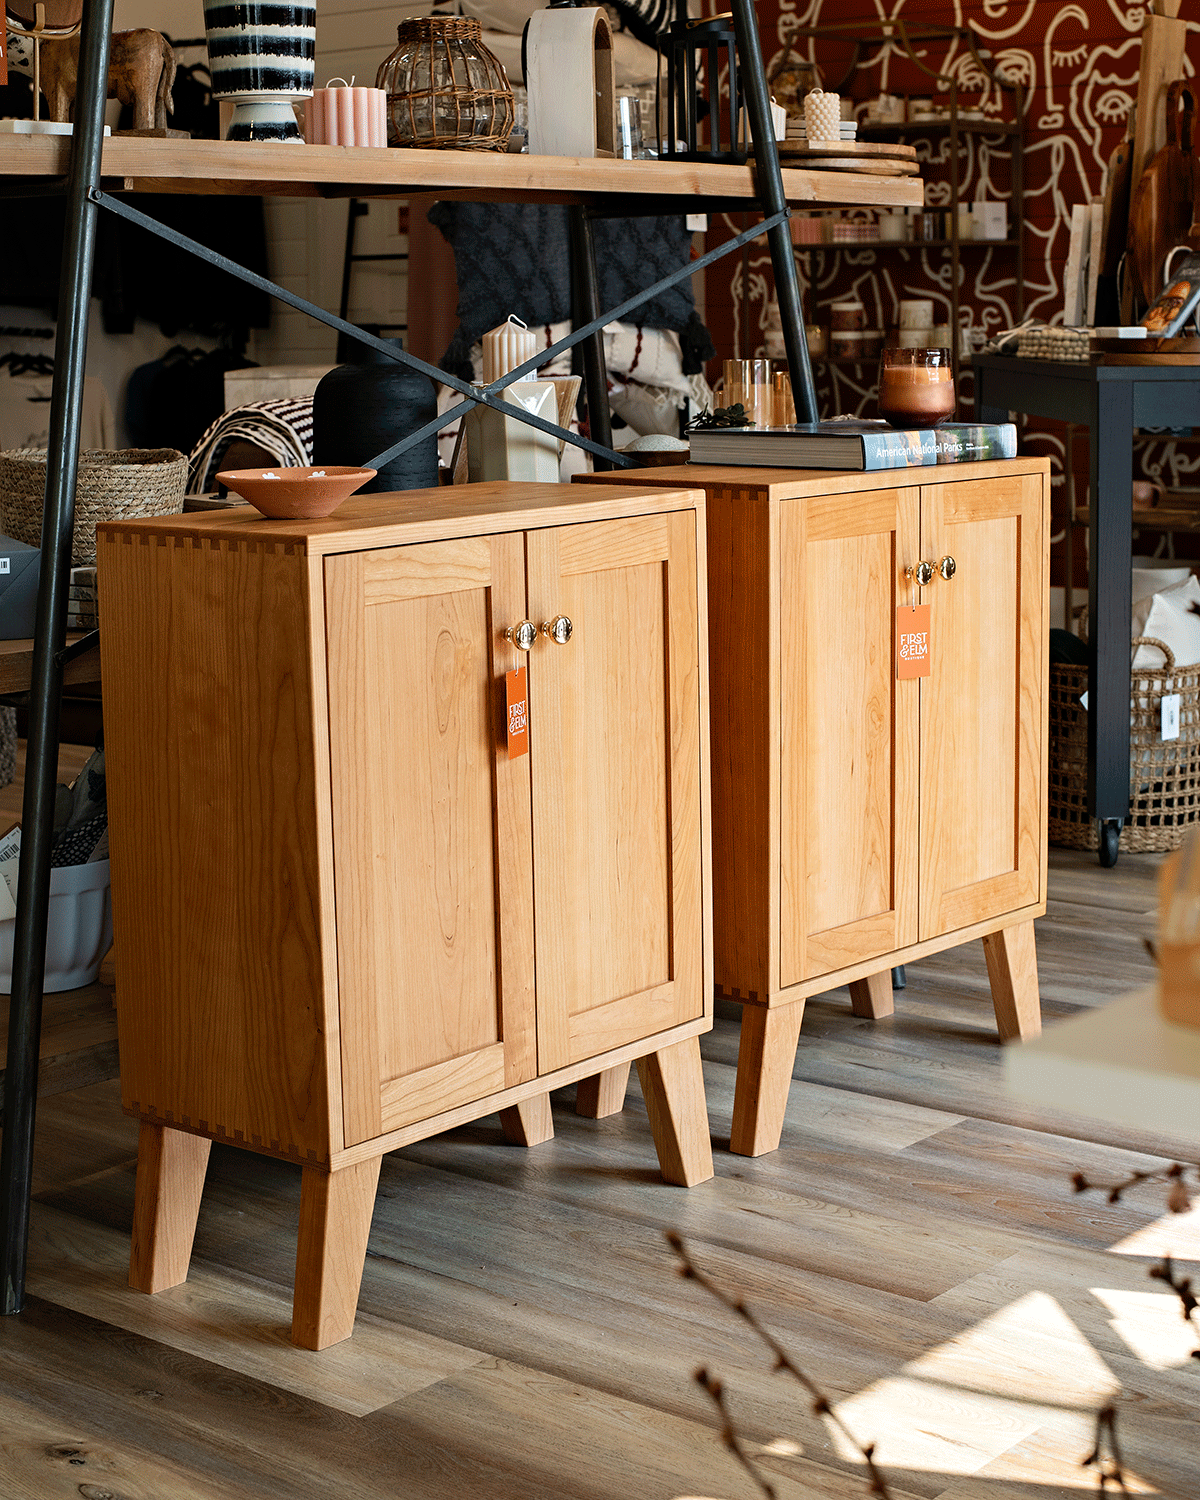 Bryce Pollock Handmade Cabinet